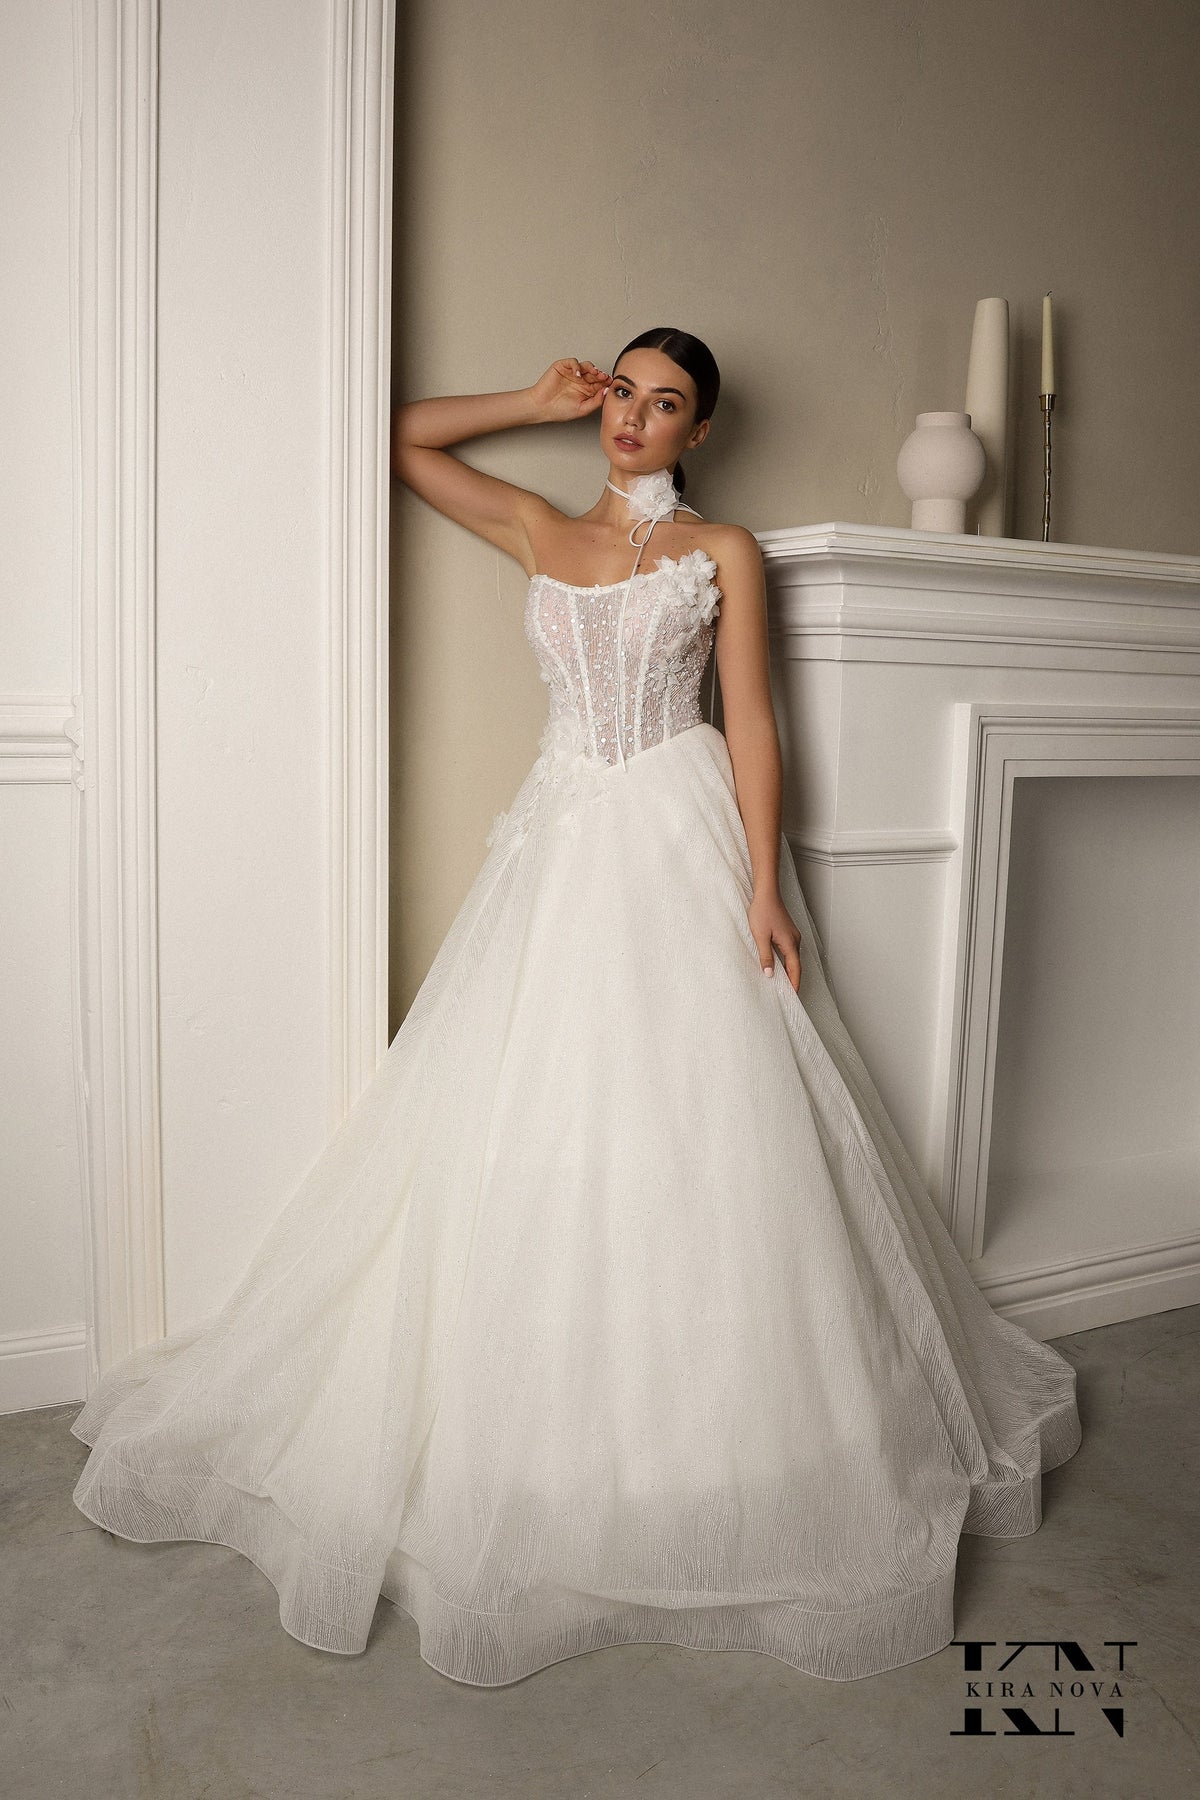 Stunning Sleeveless Strapless Wedding Dress Sparkle Bridal Gown Full Aline With Train Slight Sweetheart Neckline 3D Flowers Basque Waist